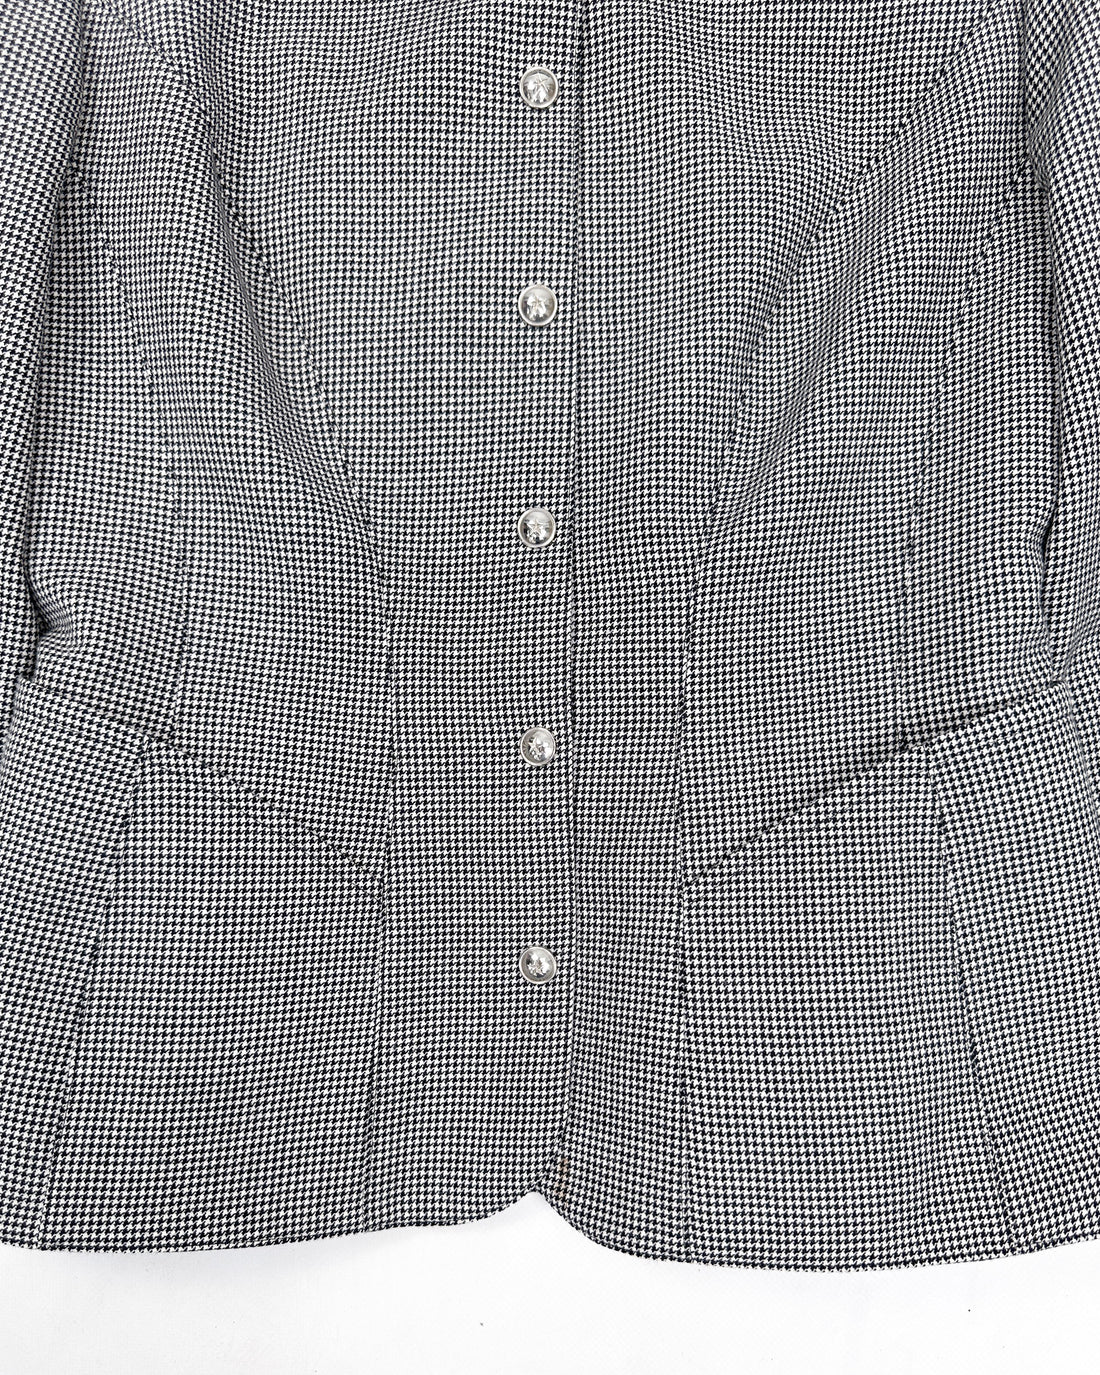 Thierry Mugler Patterned Grey Blazer 1990's